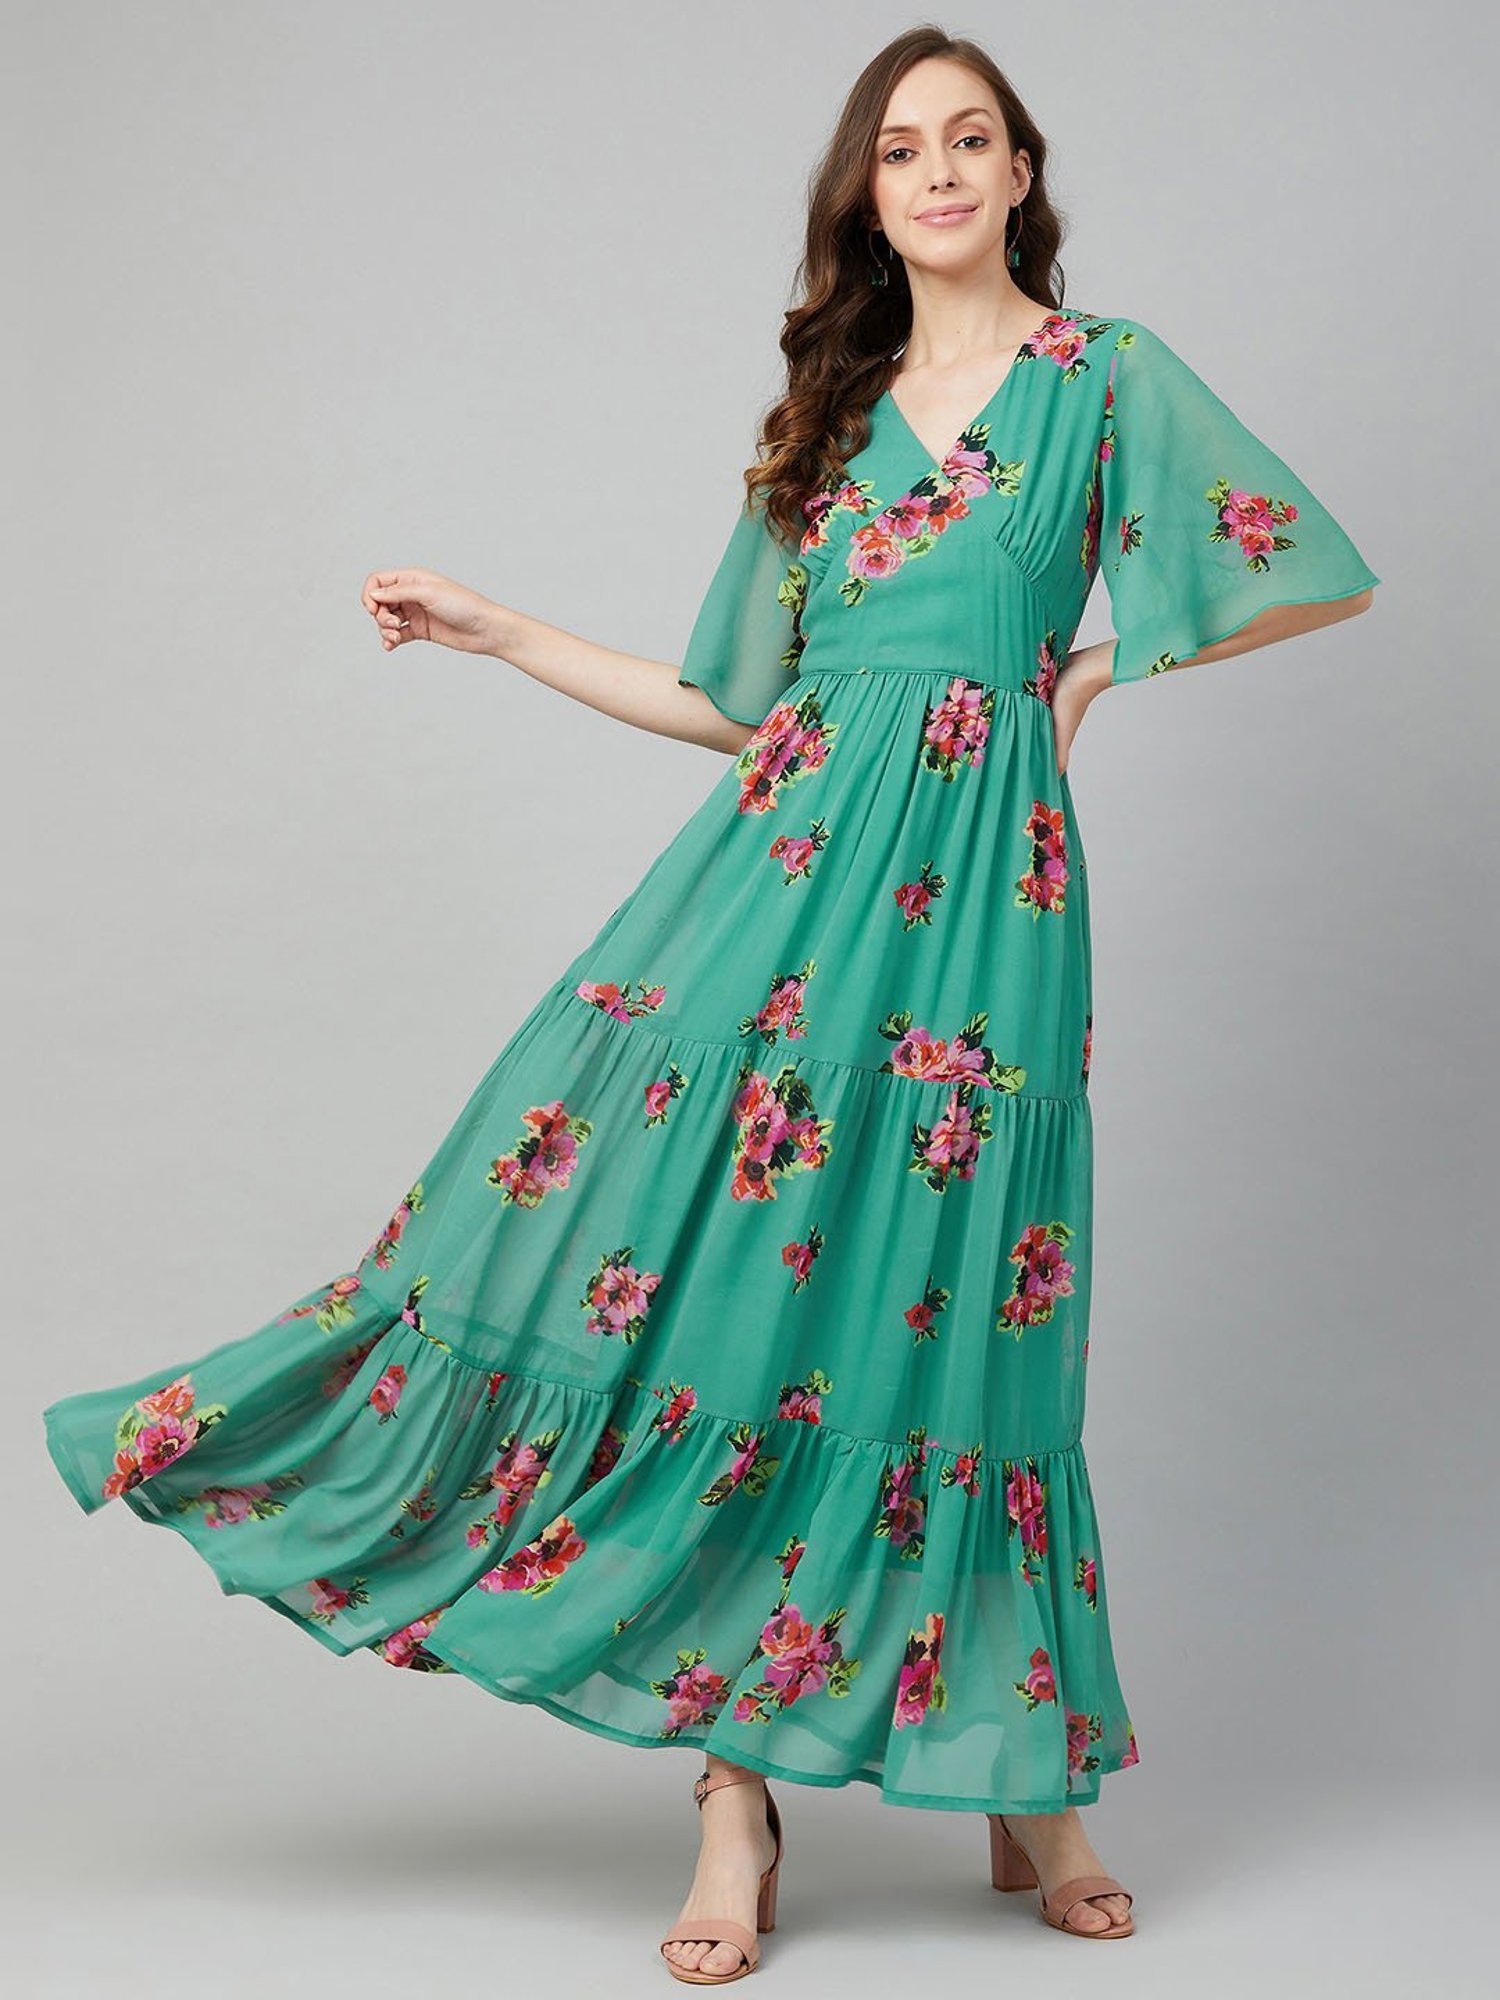 Buy Simplee Women Casual Boho Floral Maxi Dress Flowy Holiday Beach Long  Dress V Neck Short Sleeve Wedding Guest Dress, #Dark Green, M at Amazon.in